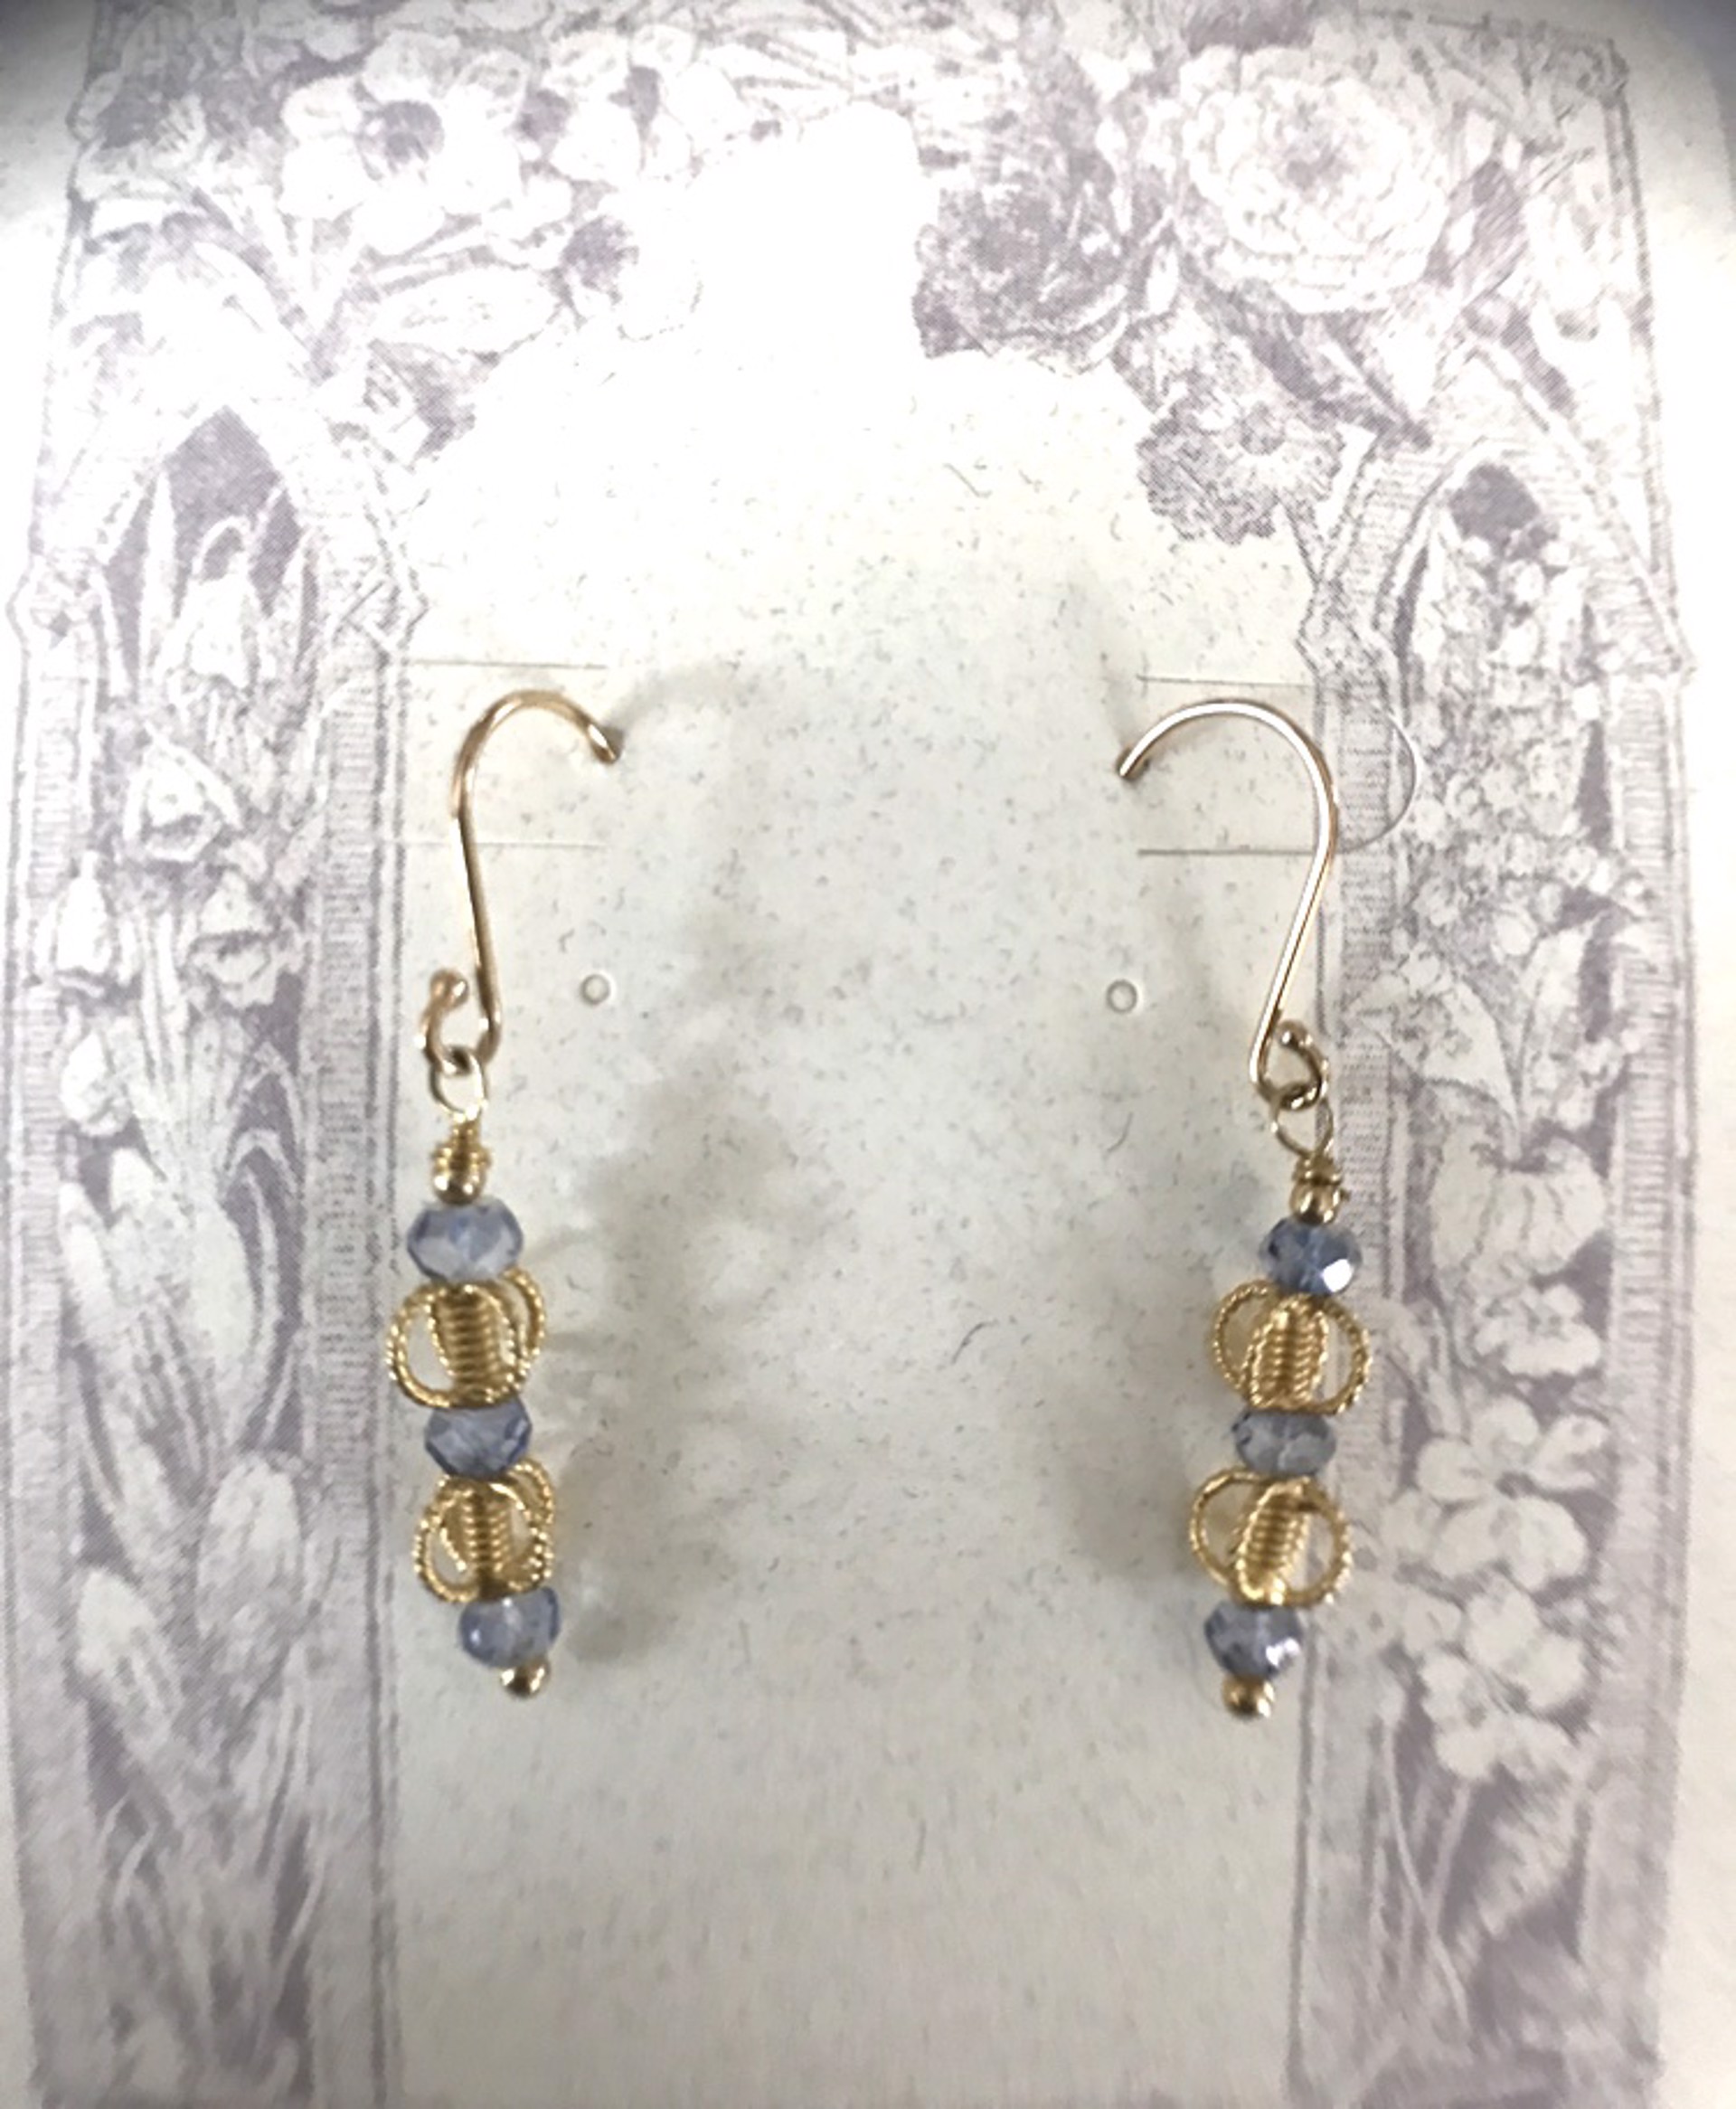 Earrings - Iolite & Gold Vermeil  #8667 by Bonnie Jaus